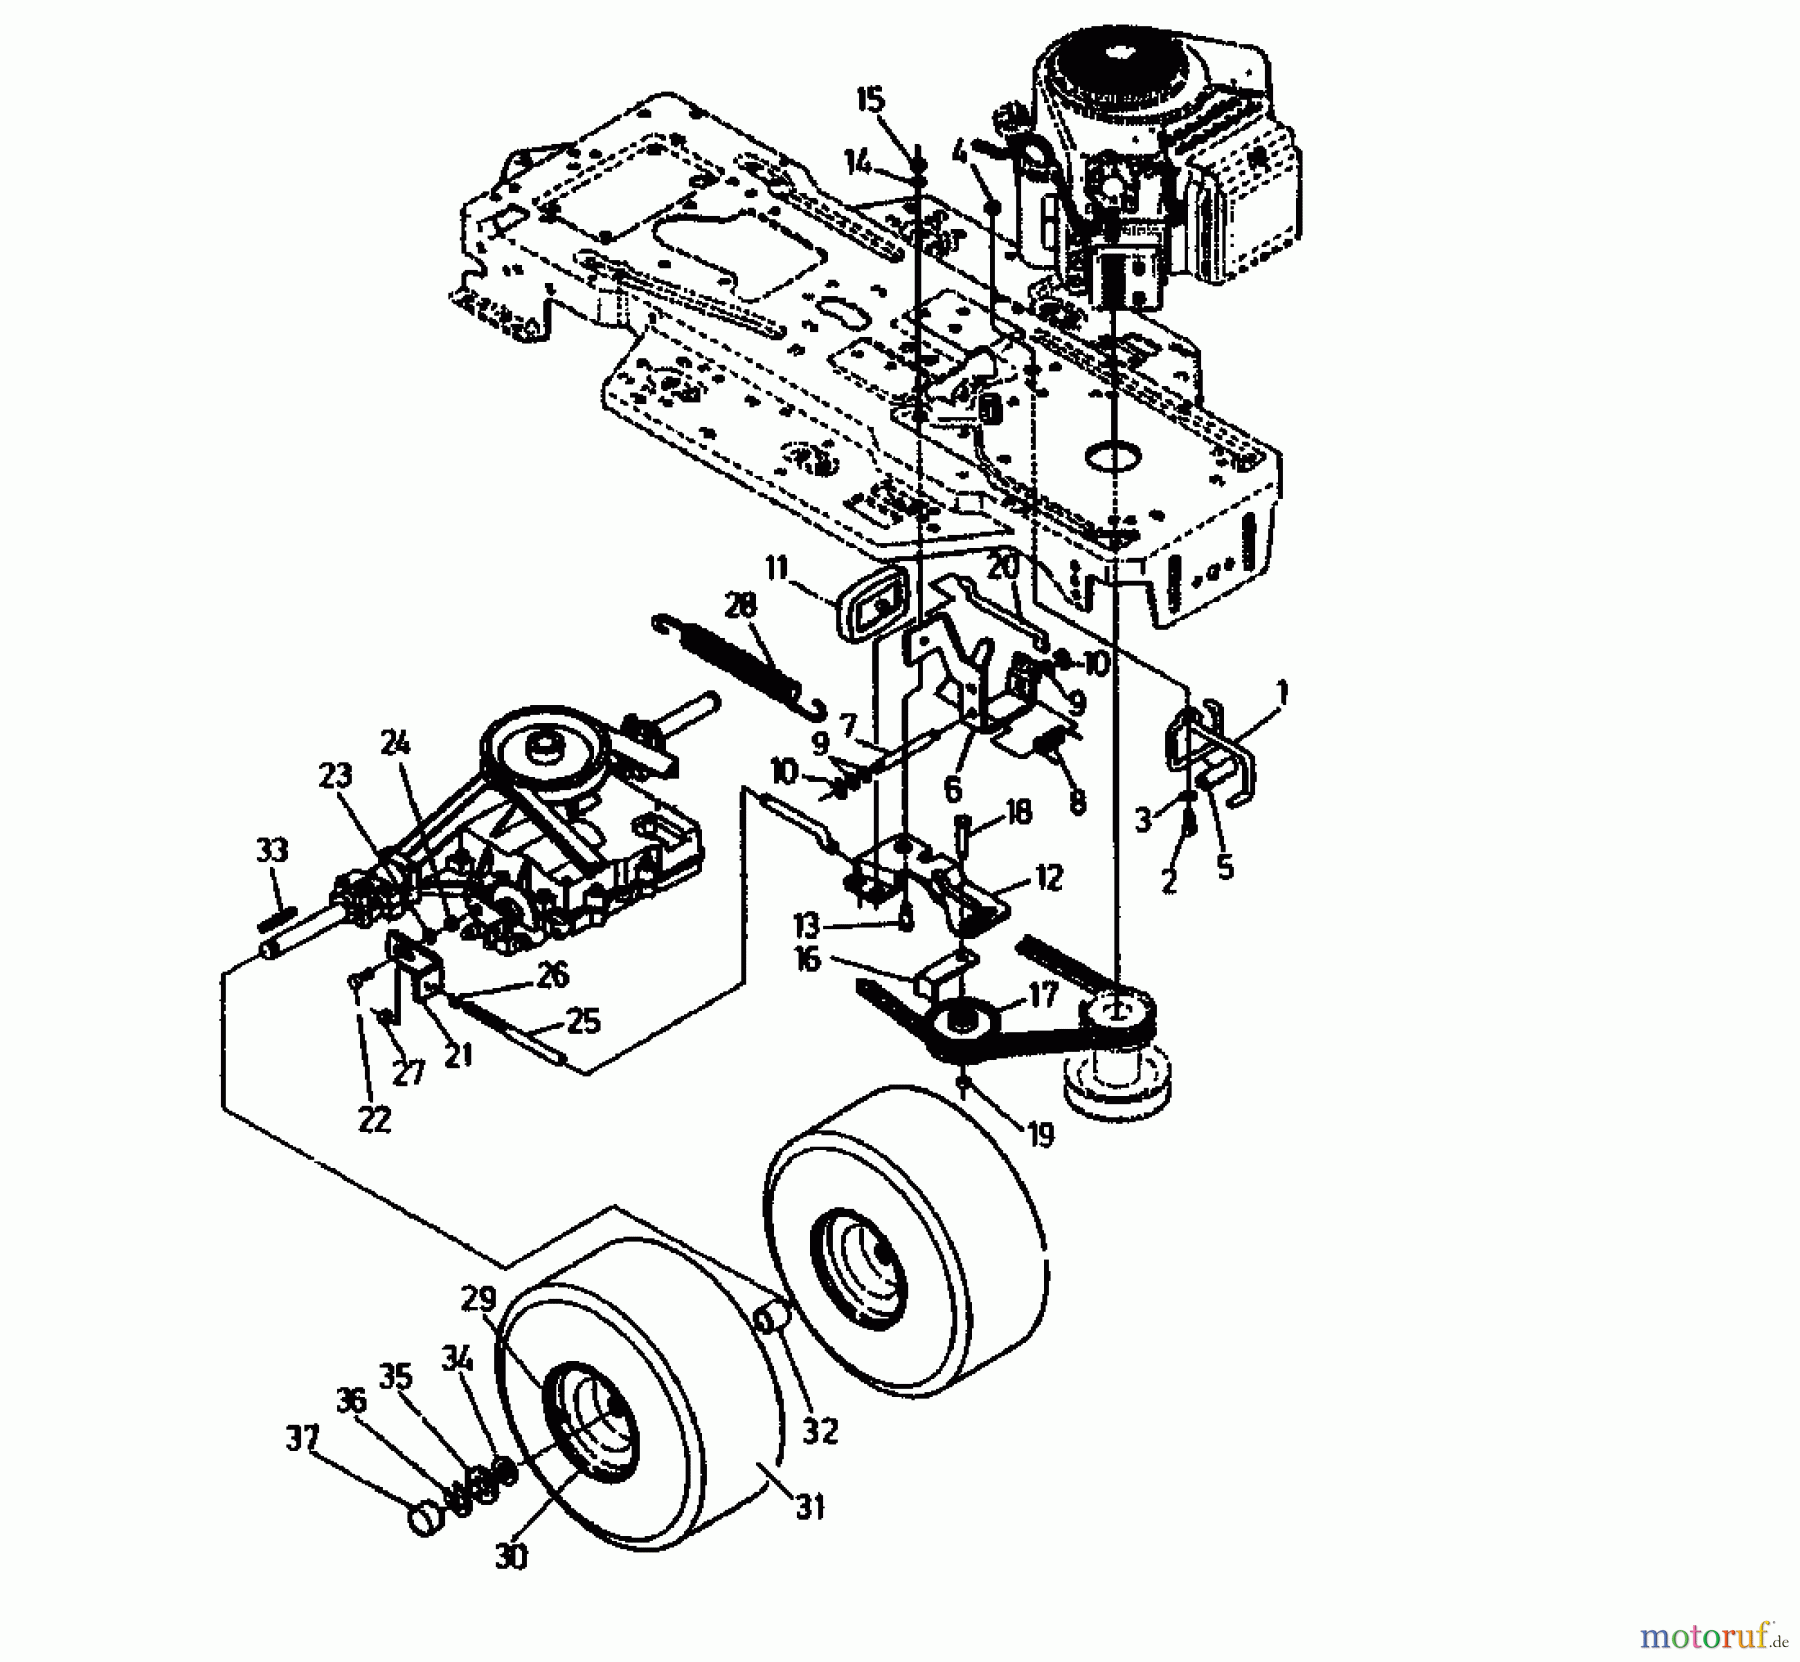  Gutbrod Lawn tractors RSB 100-12 04015.02  (1991) Rear wheels